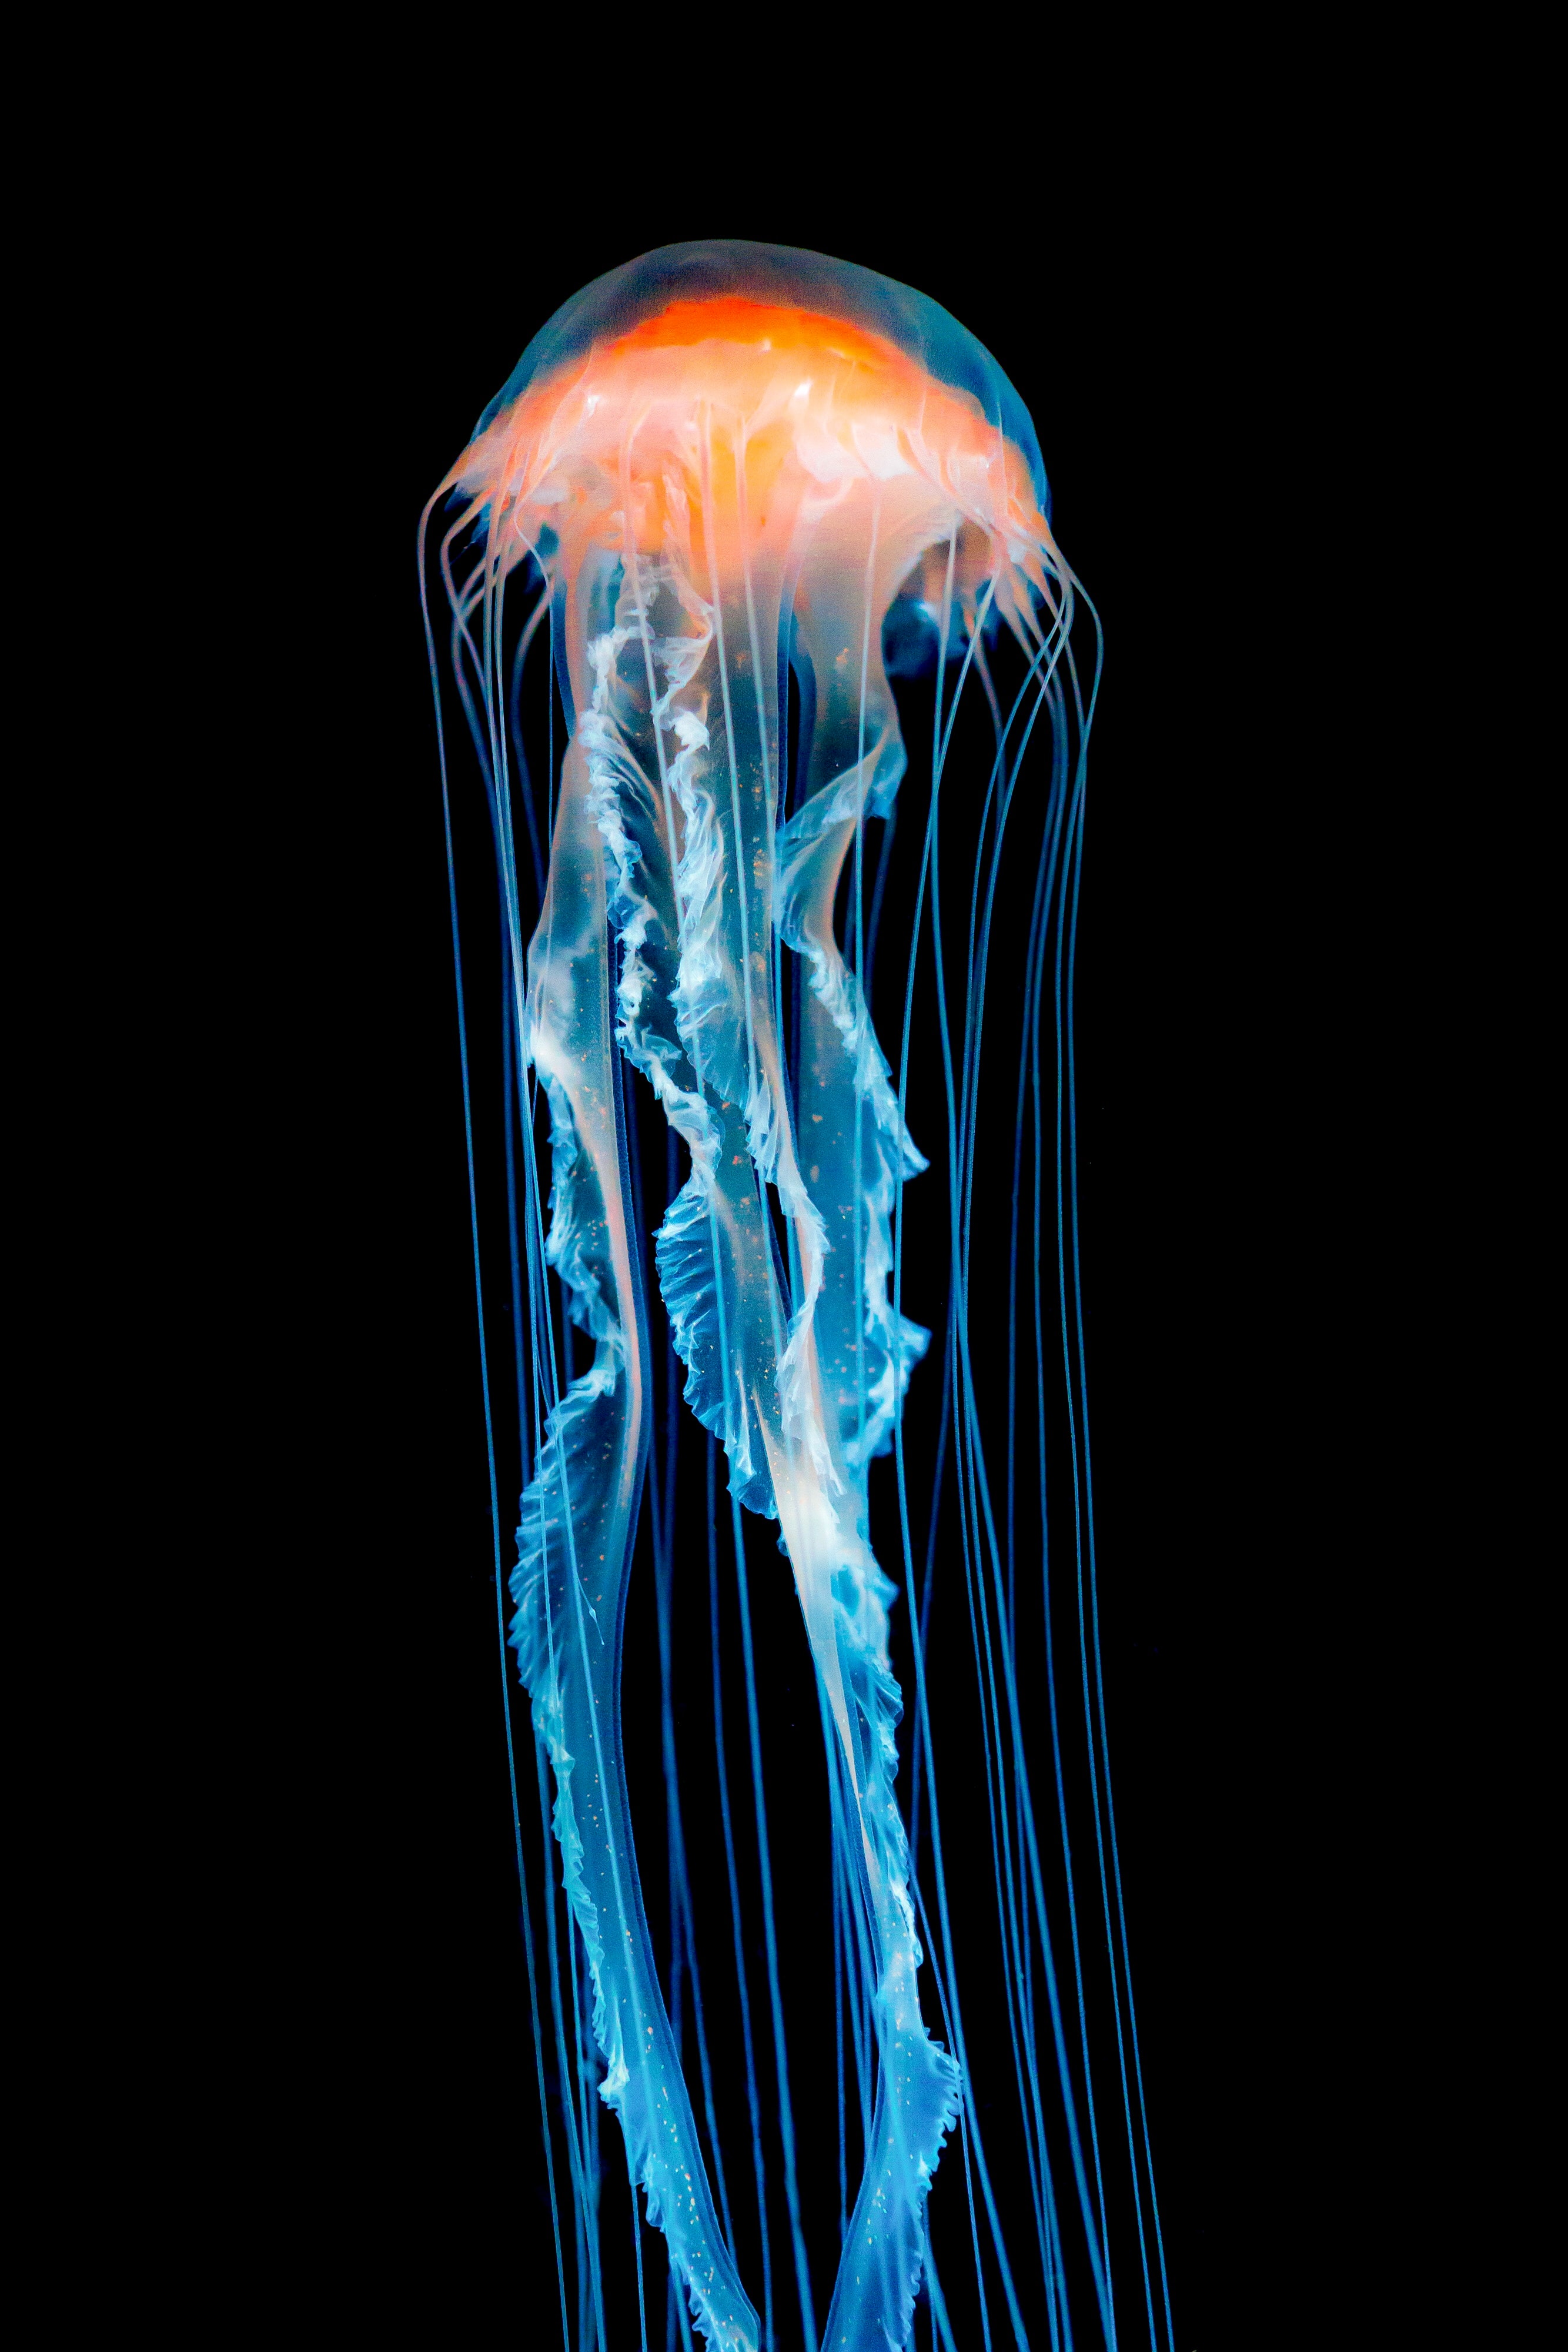 1080p Jellyfish Hd Images